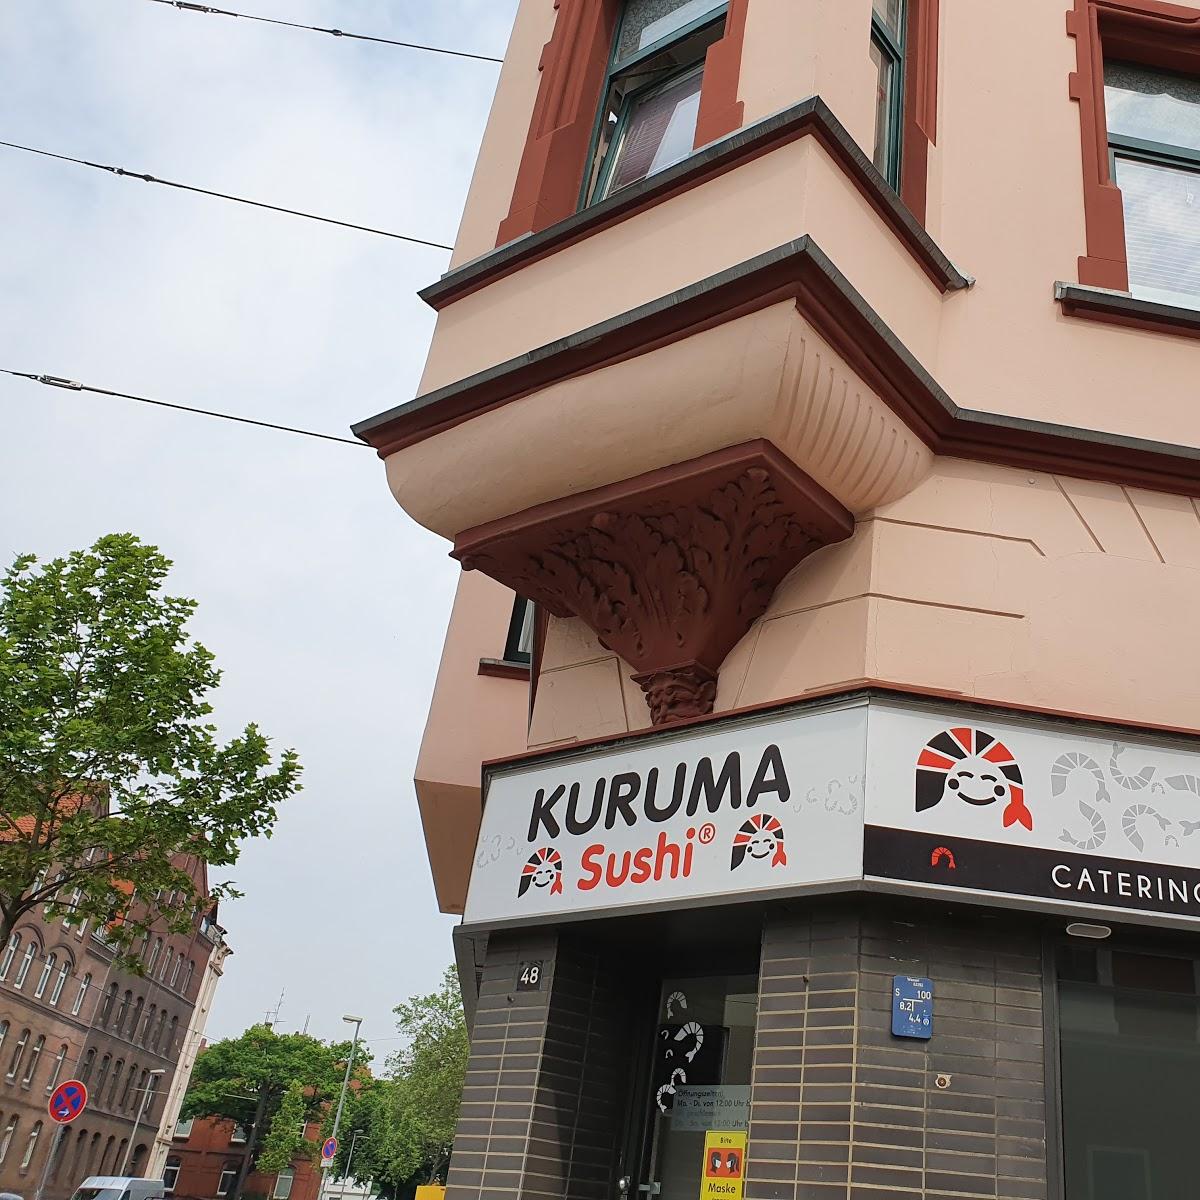 Restaurant "Kuruma Sushi" in Hannover